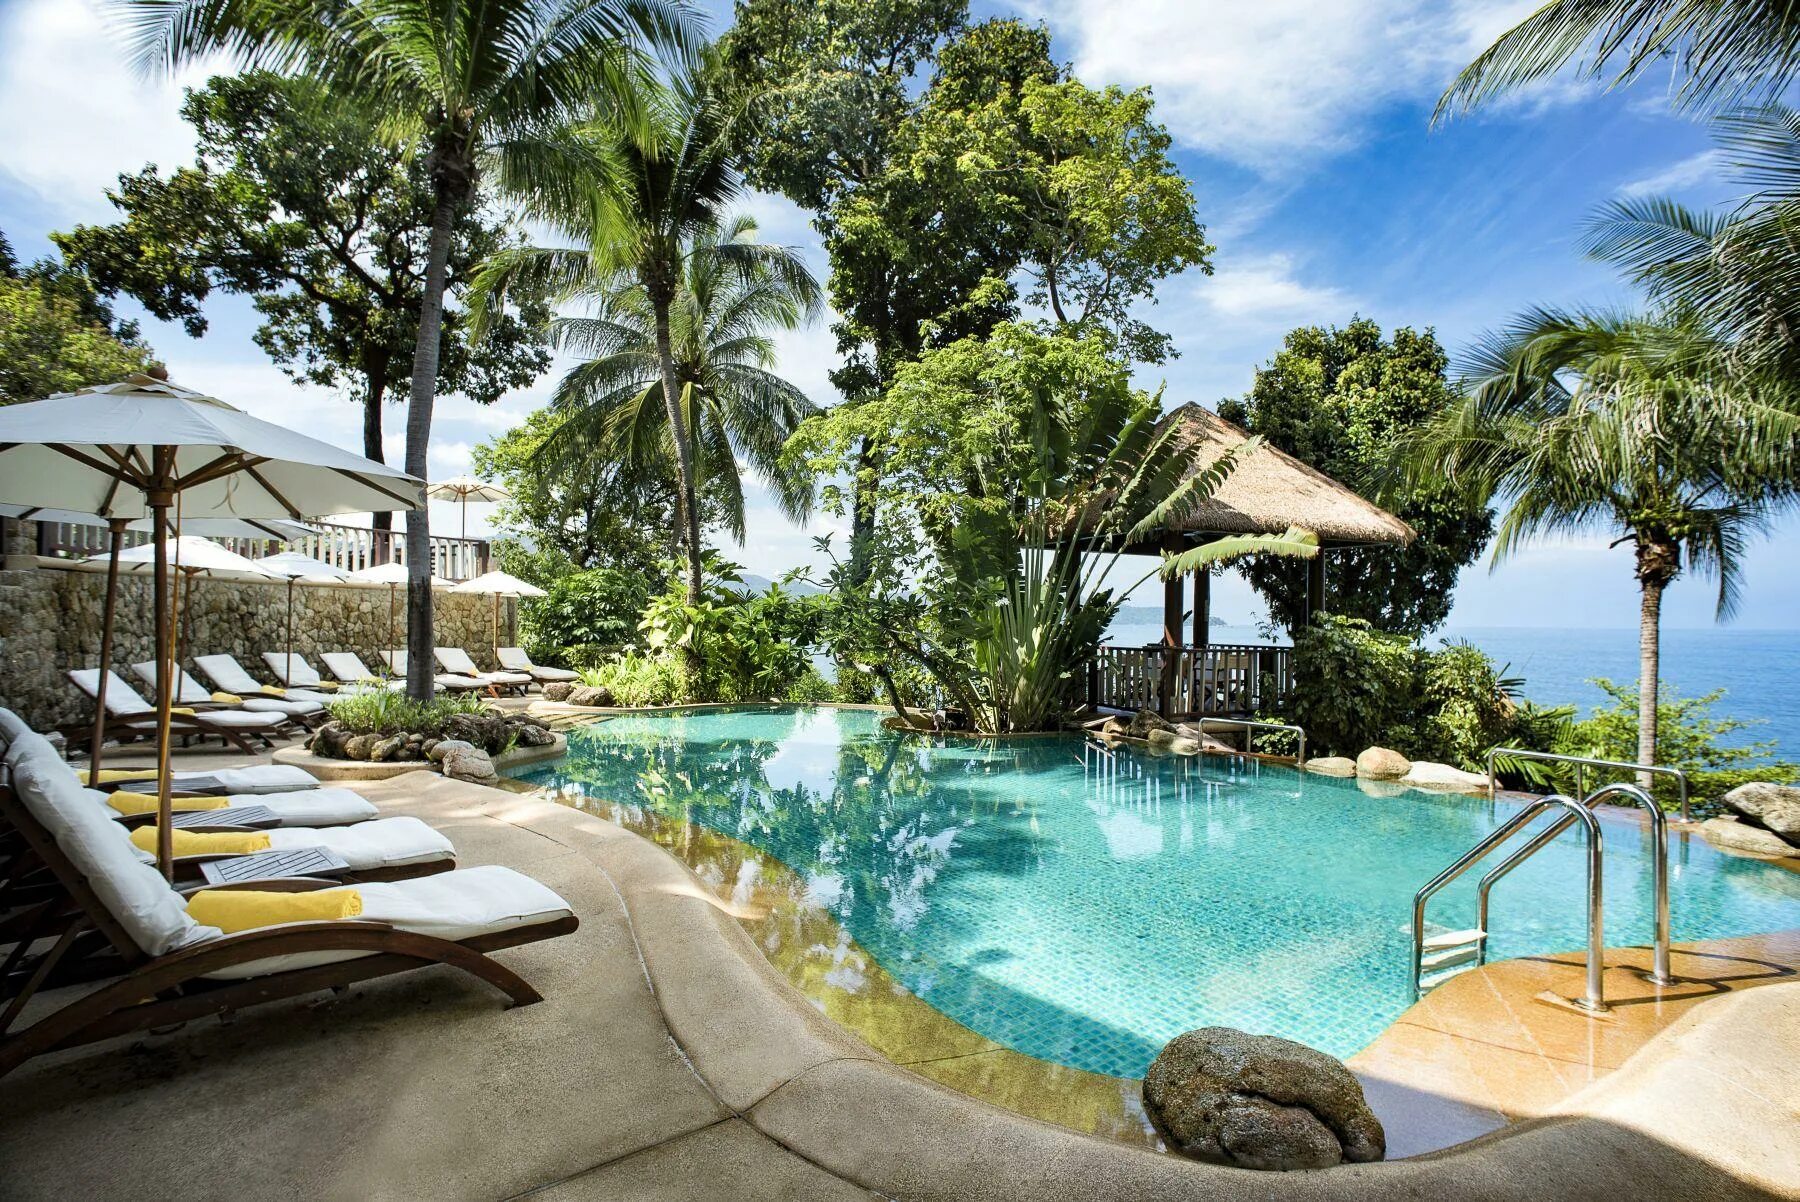 Centara Karon Resort Phuket Villas. Centara Villas 4* Пхукет. Centara Villas Phuket 4 Карон. Тайланд Пхукет Сентара.